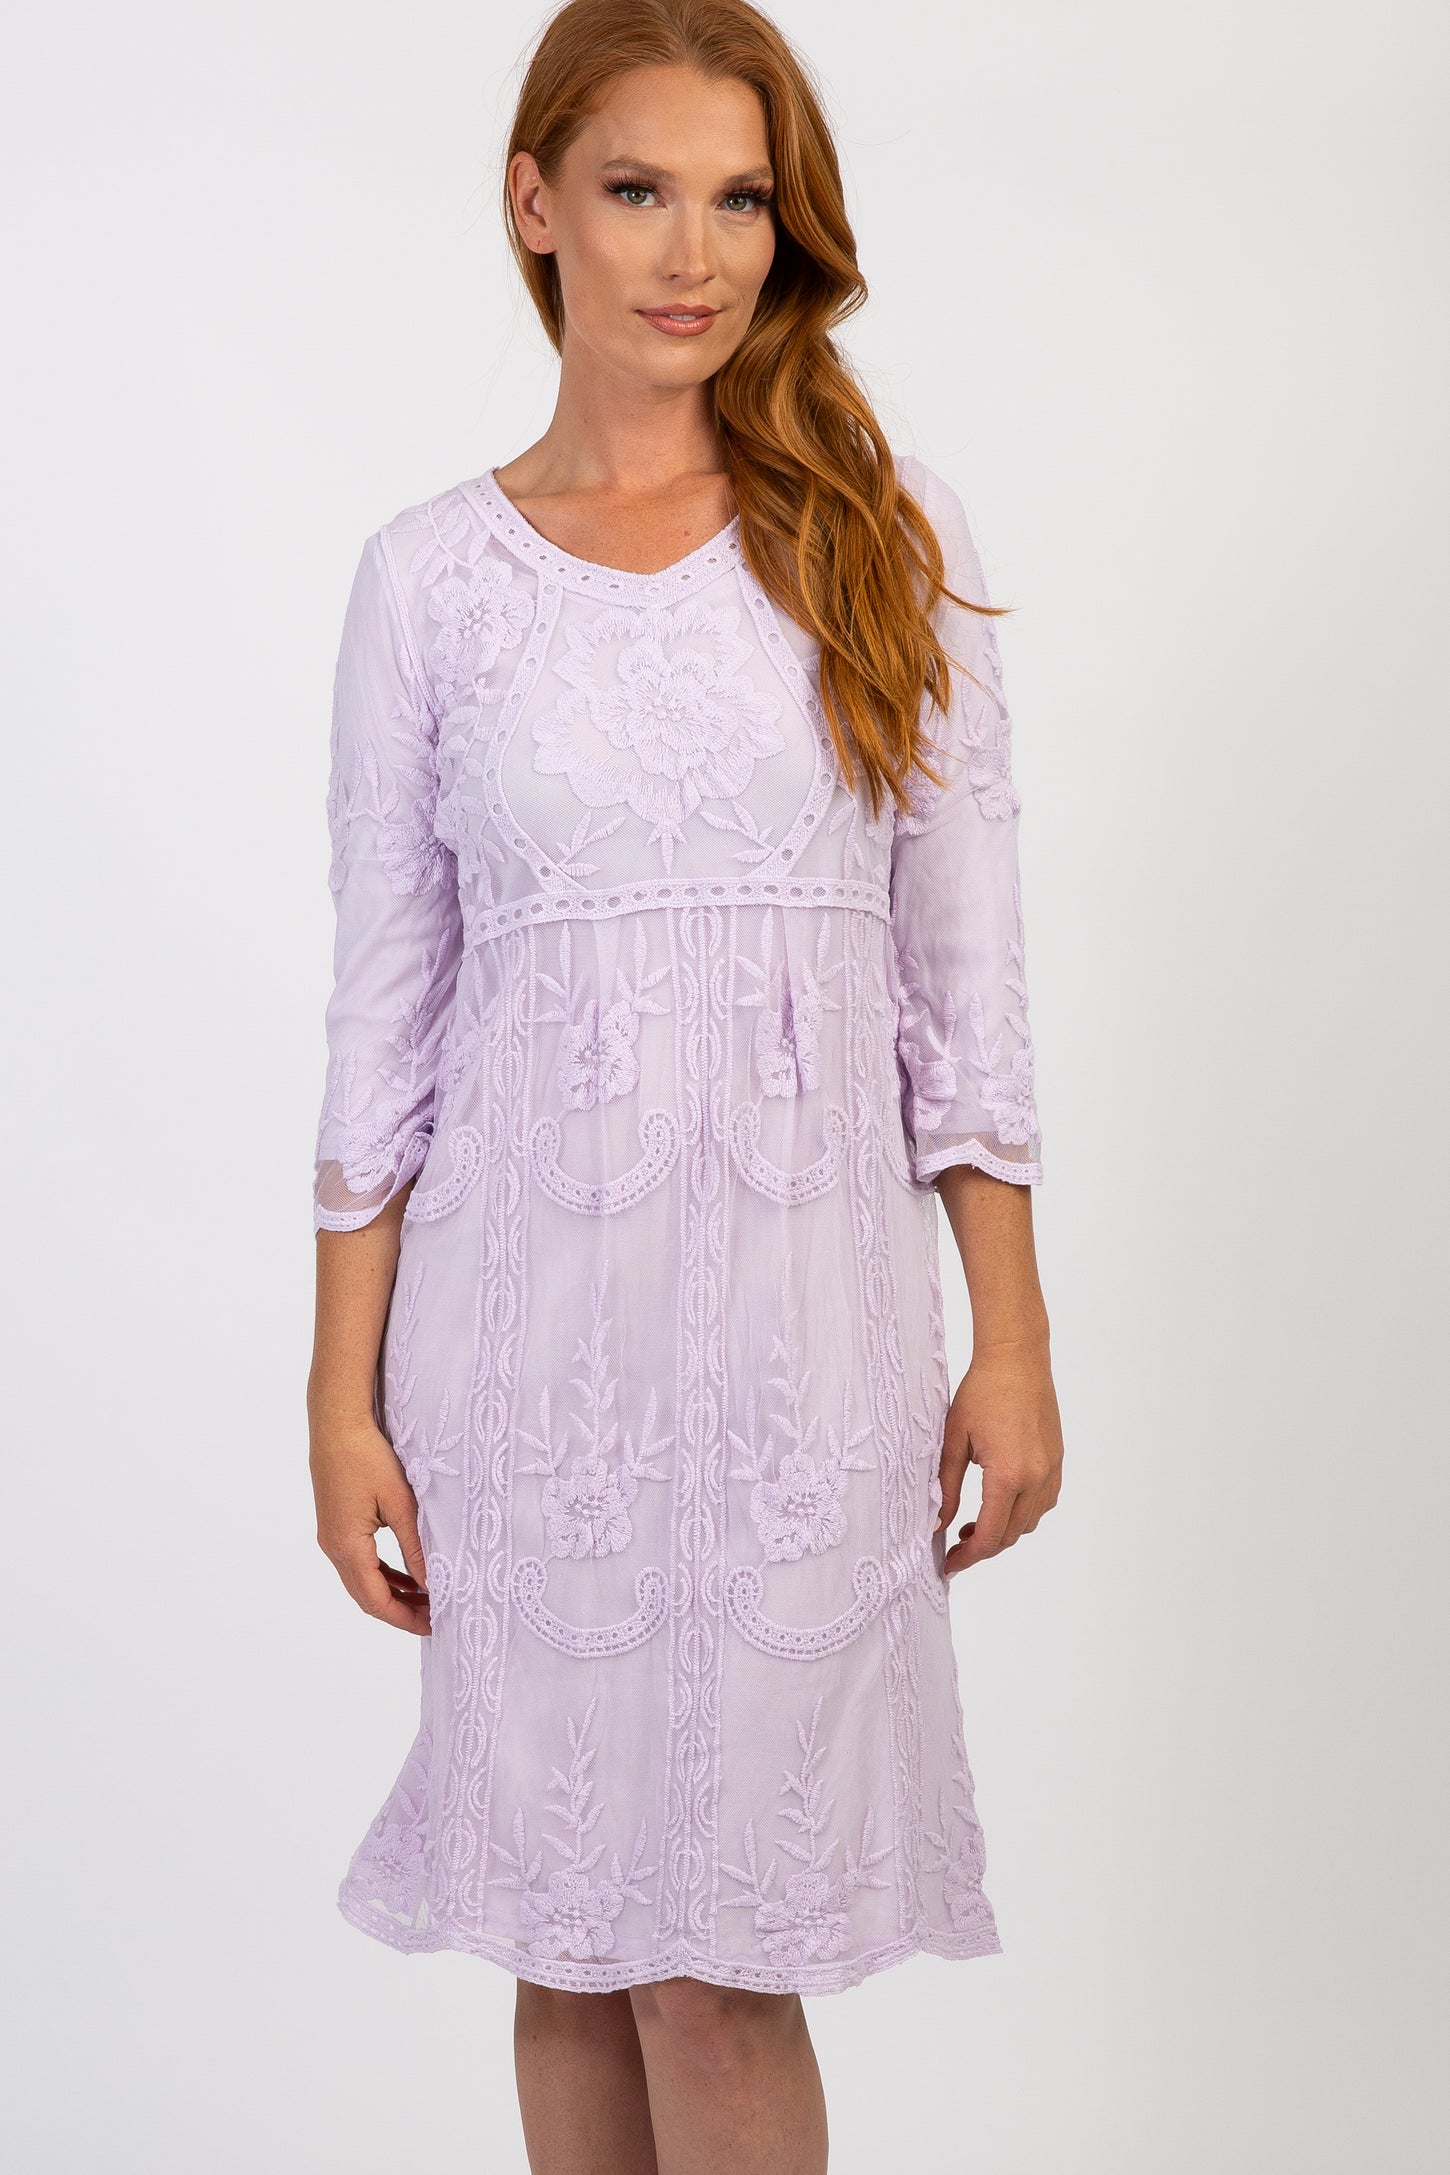 Lavender 3/4 Sleeve Lace Dress